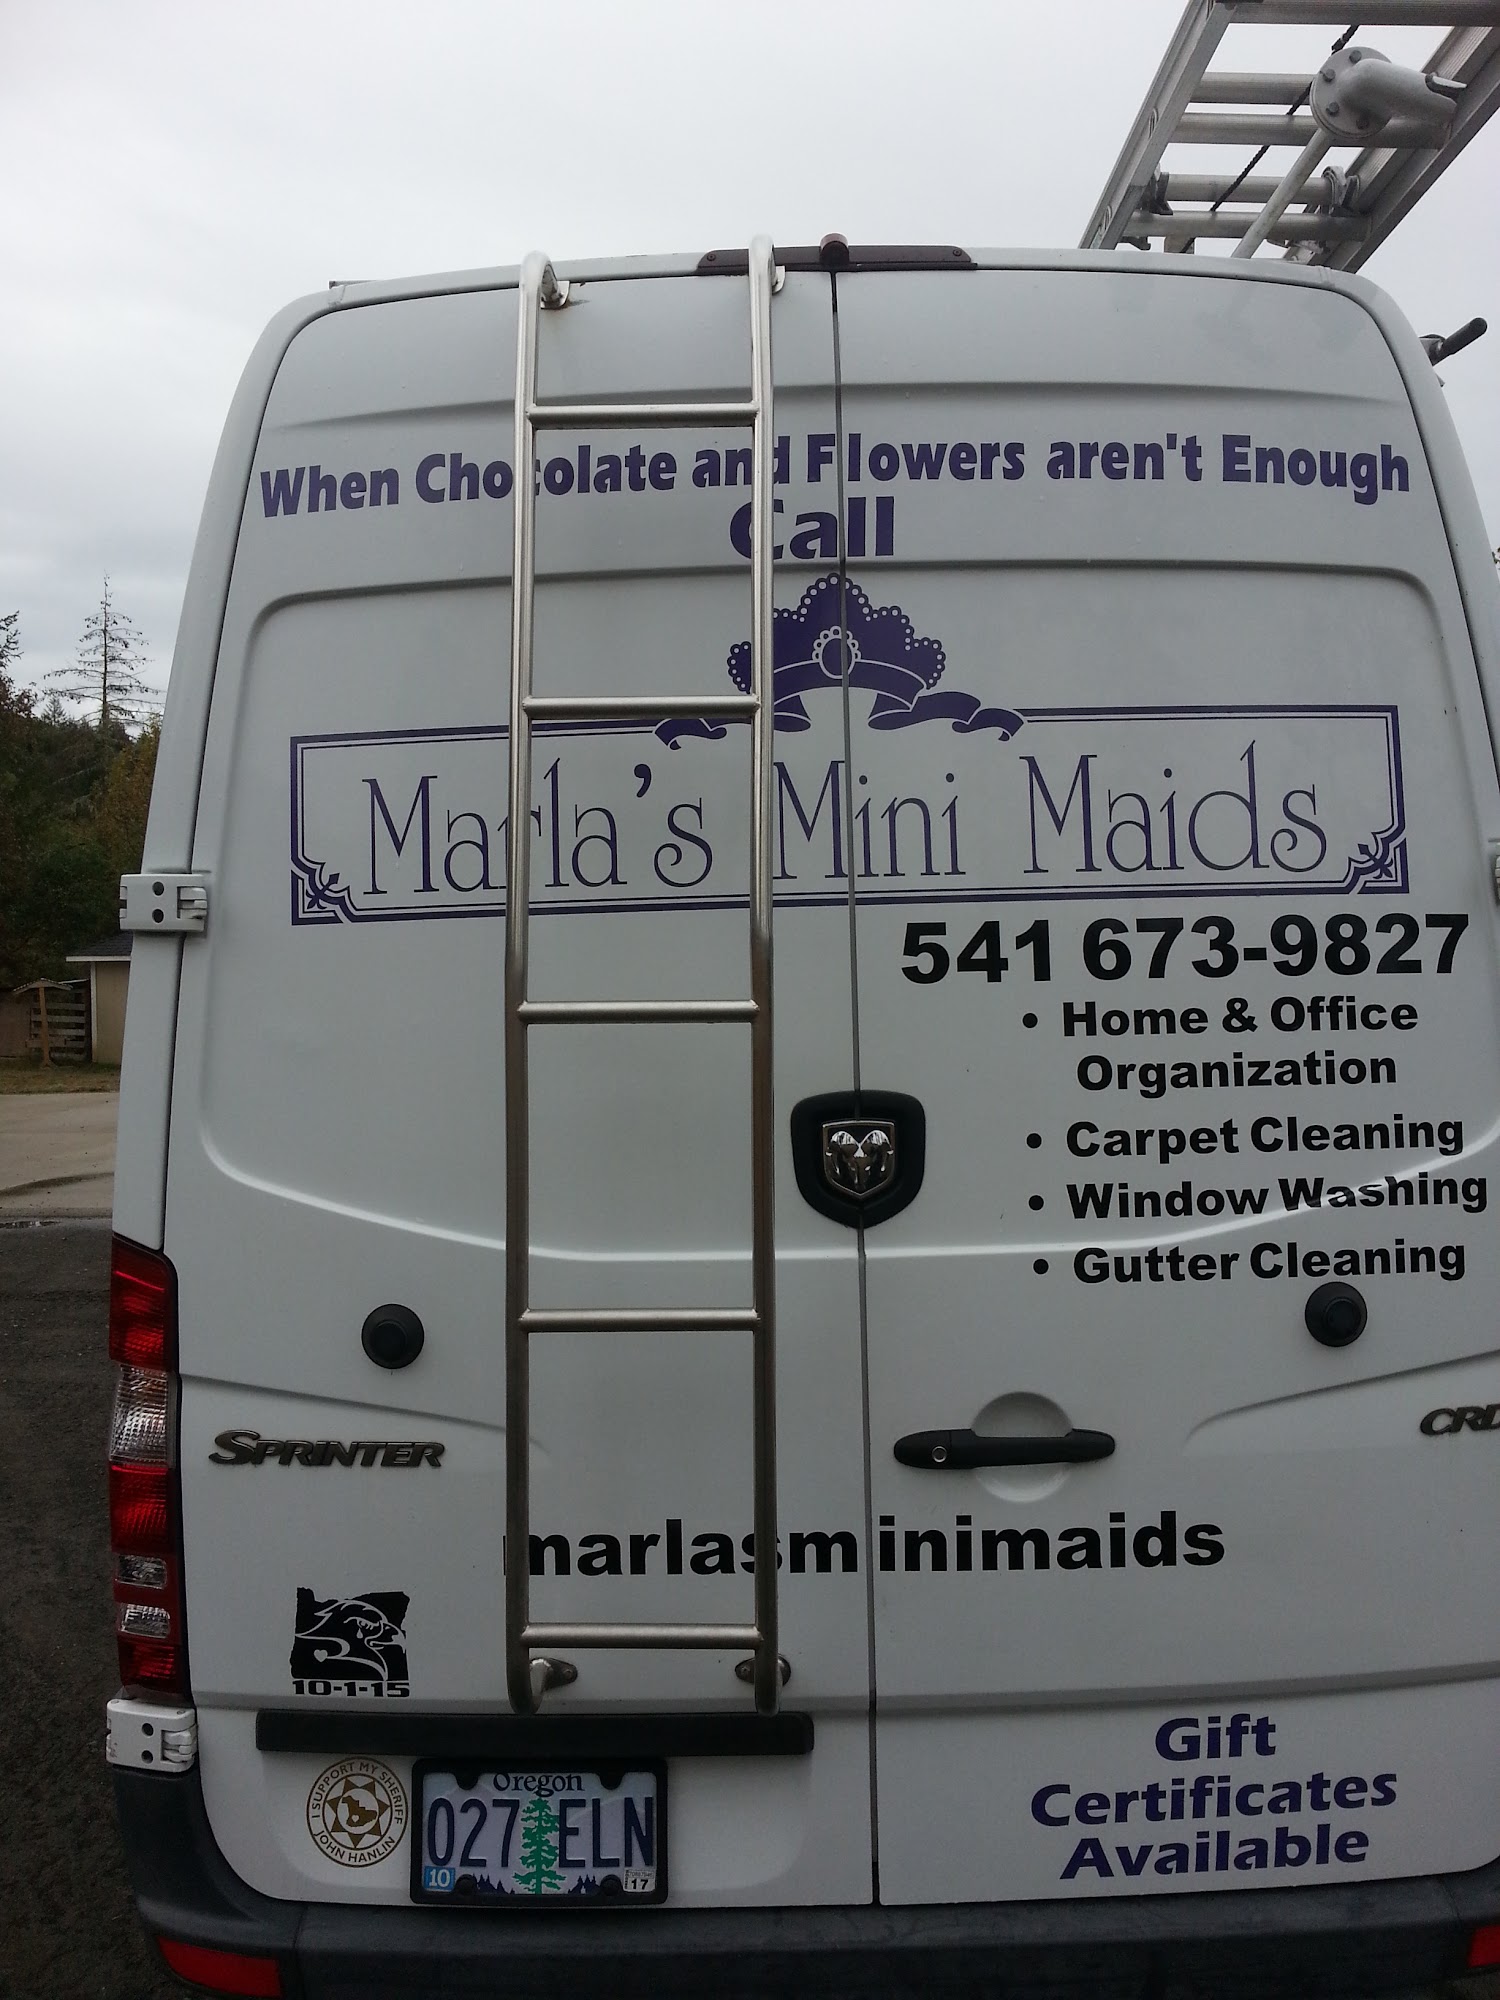 Marla's Mini Maids